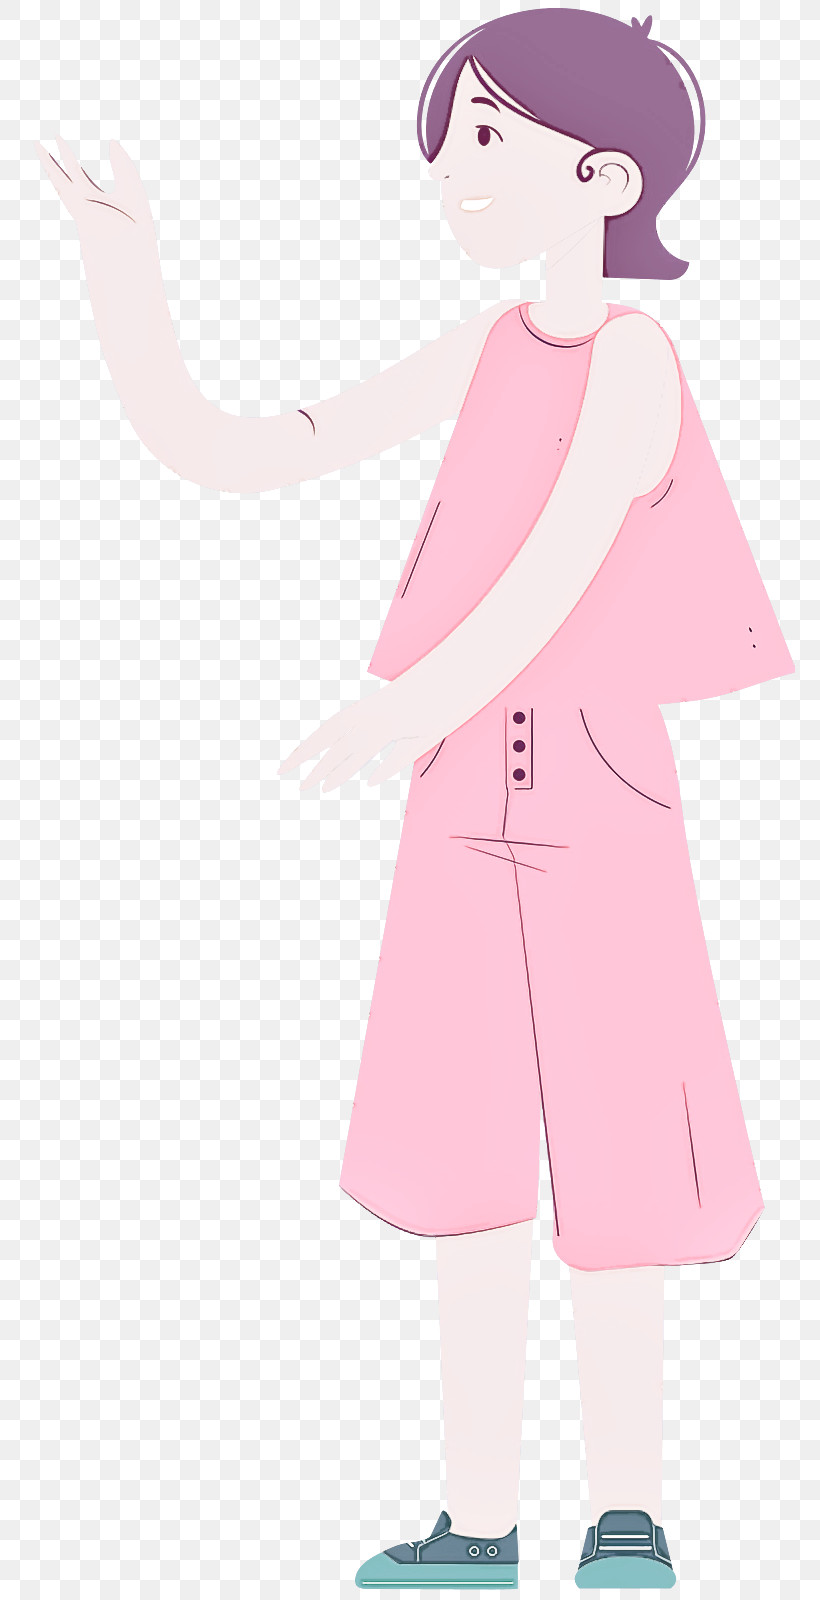 Clothing Costume Design Sailor Moon Crystal Minato Ward Shibakoen Junior High School Uniform Acos, Medium Cartoon Character, PNG, 770x1600px, Cartoon Girl, Cartoon, Cartoon Female, Cartoon Woman, Character Download Free